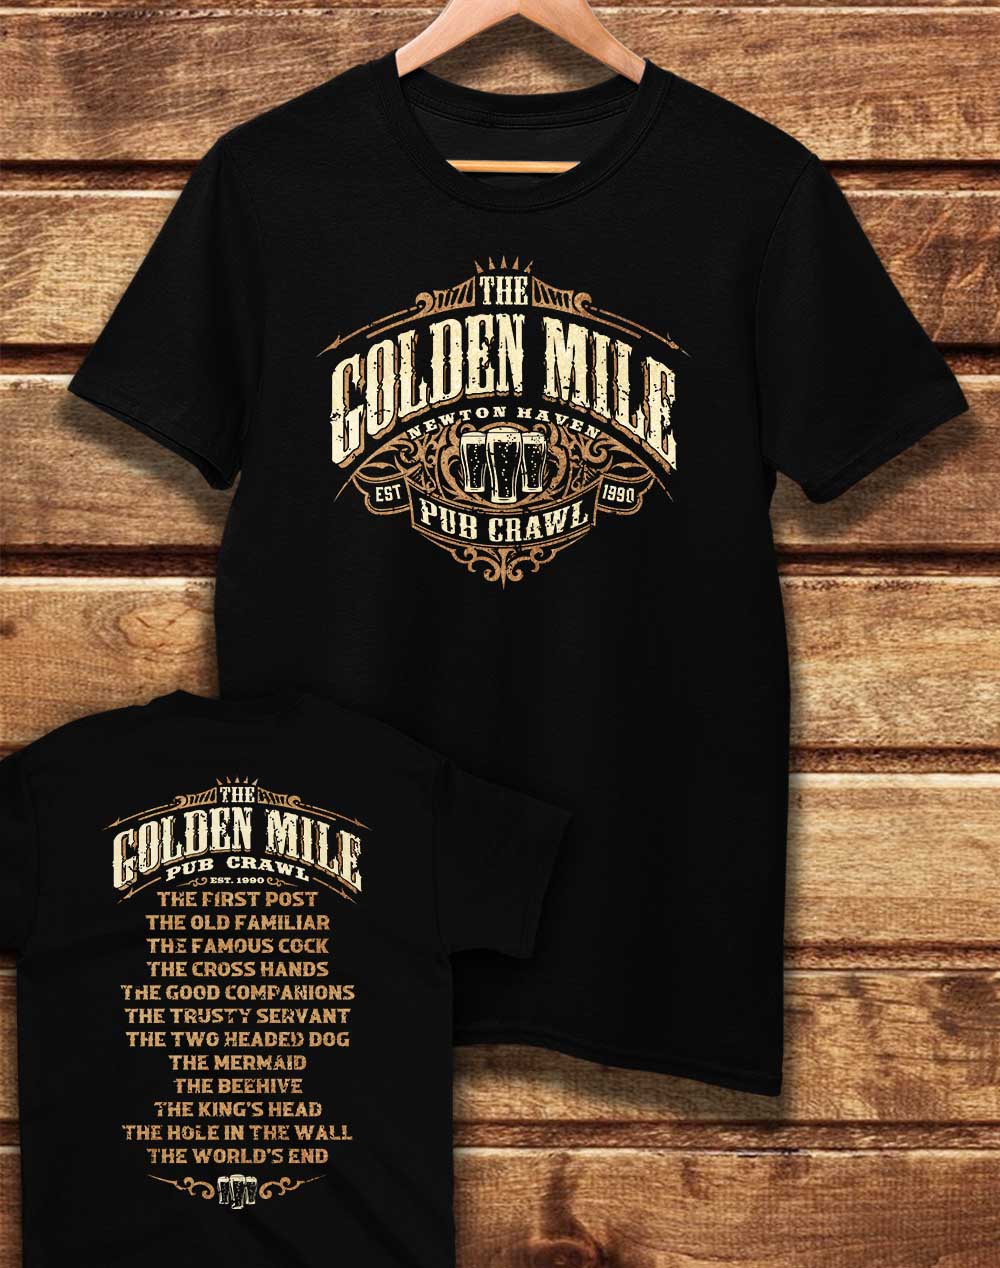 Black - DELUXE The Golden Mile Pub Crawl Organic Cotton T-Shirt